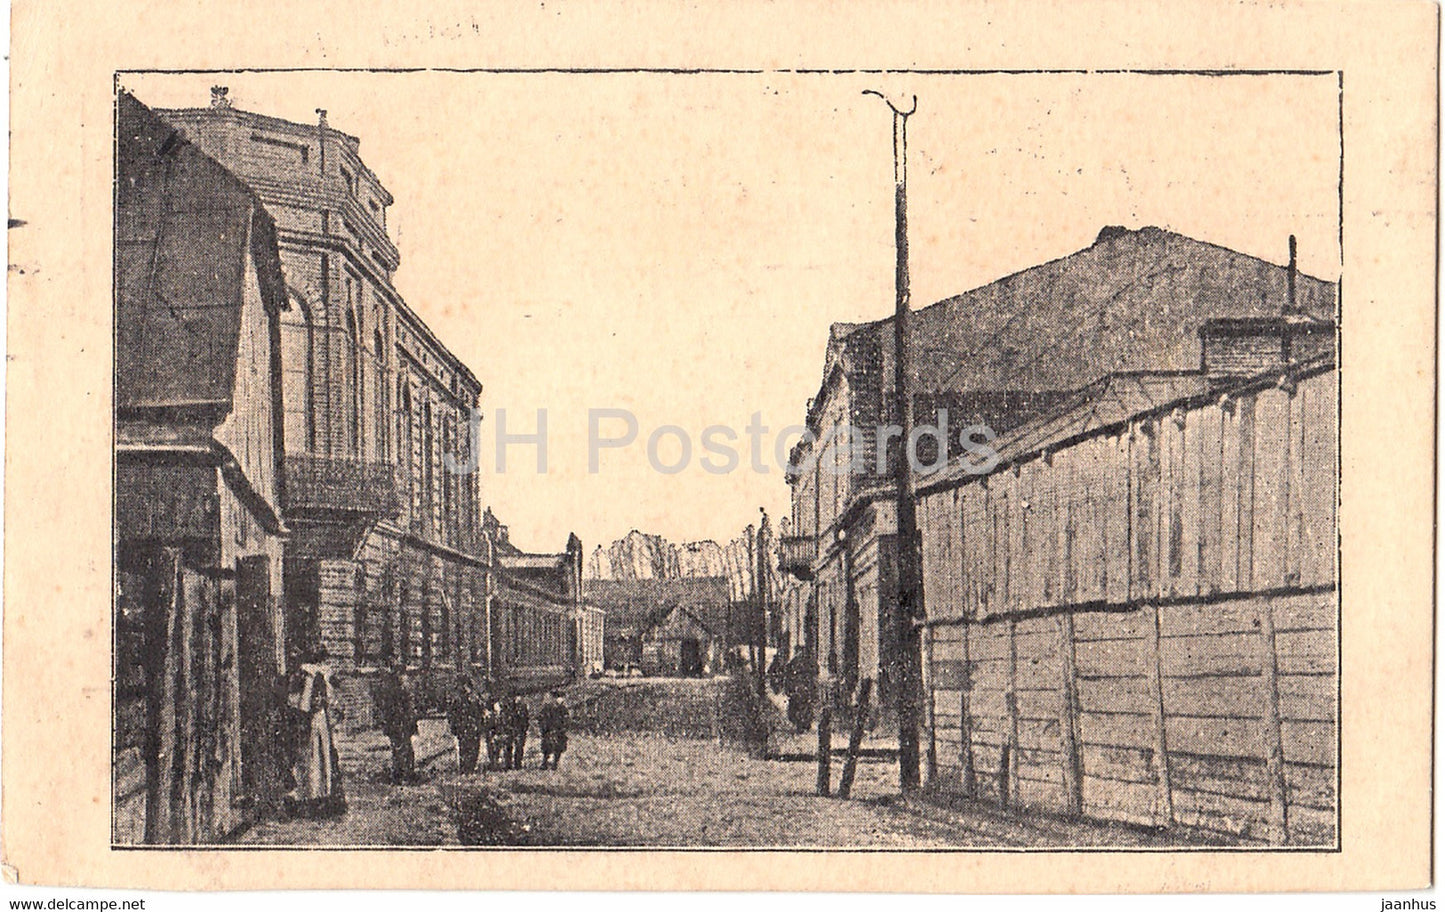 street view - Feldpost - old postcard - 1916 - Poland - used - JH Postcards